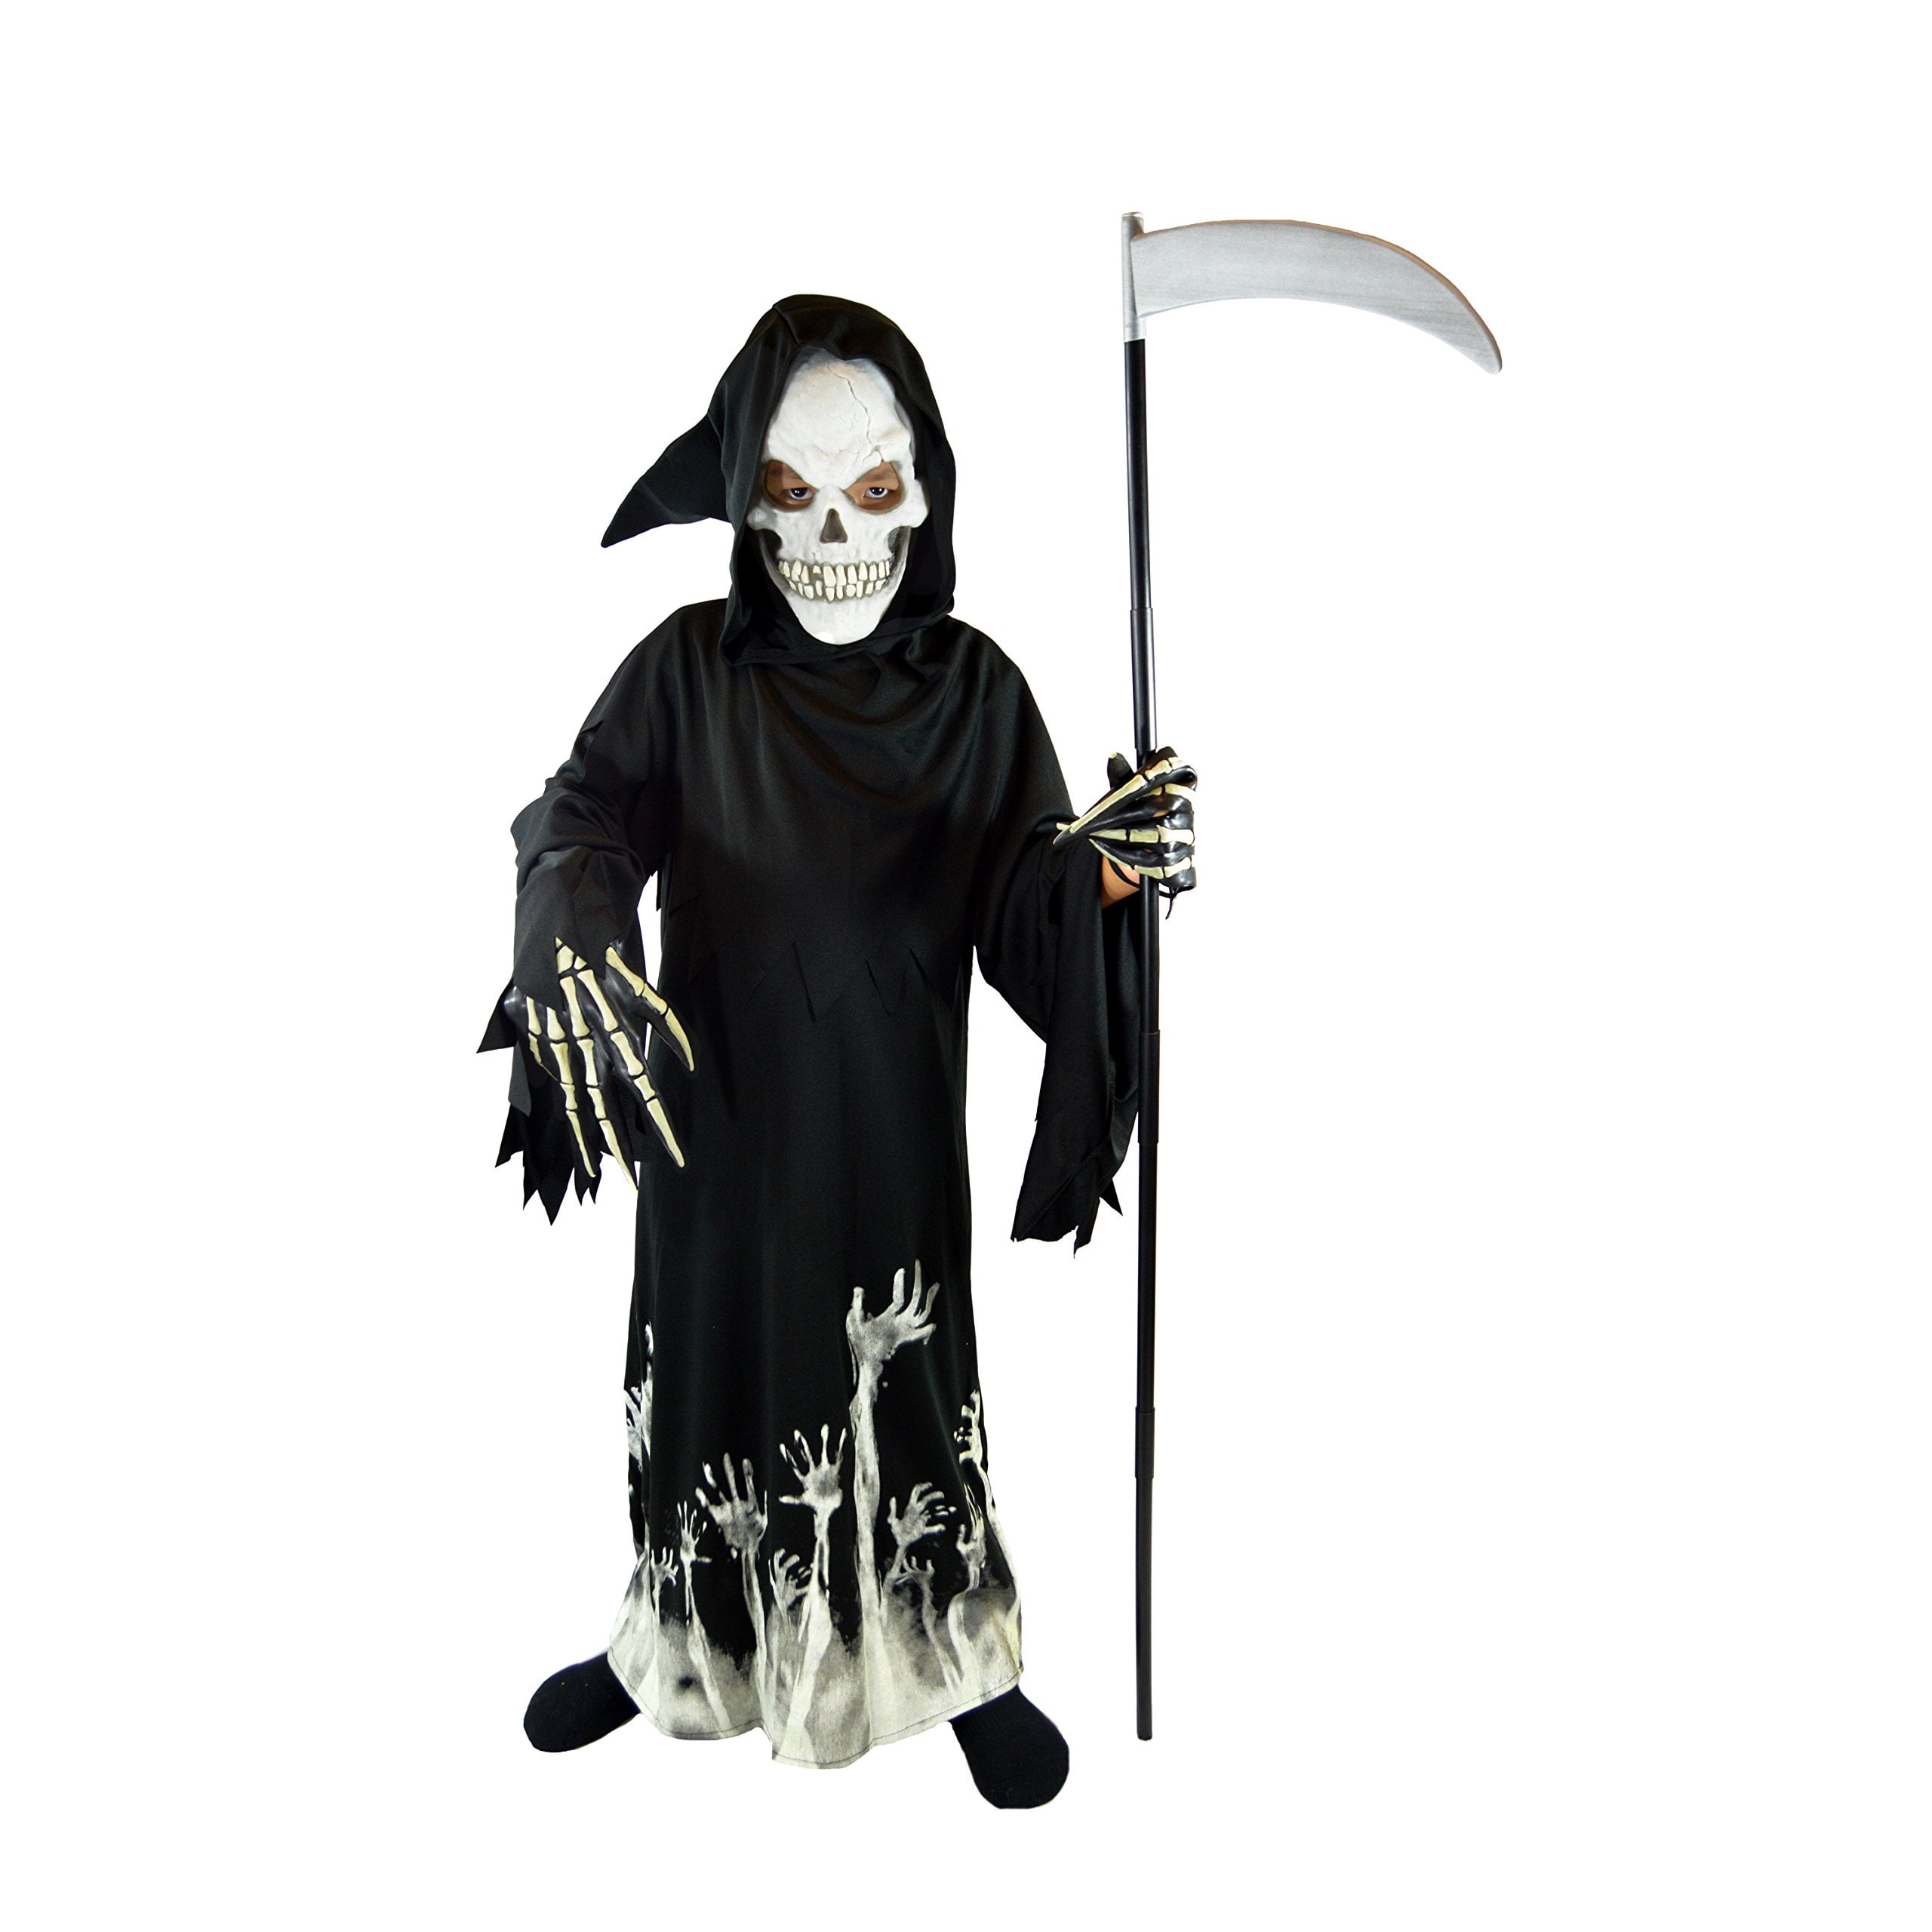 Spooktacular Creations Child Unisex Glowing Eyes Reaper Costume for Creepy Phantom Halloween Costume 